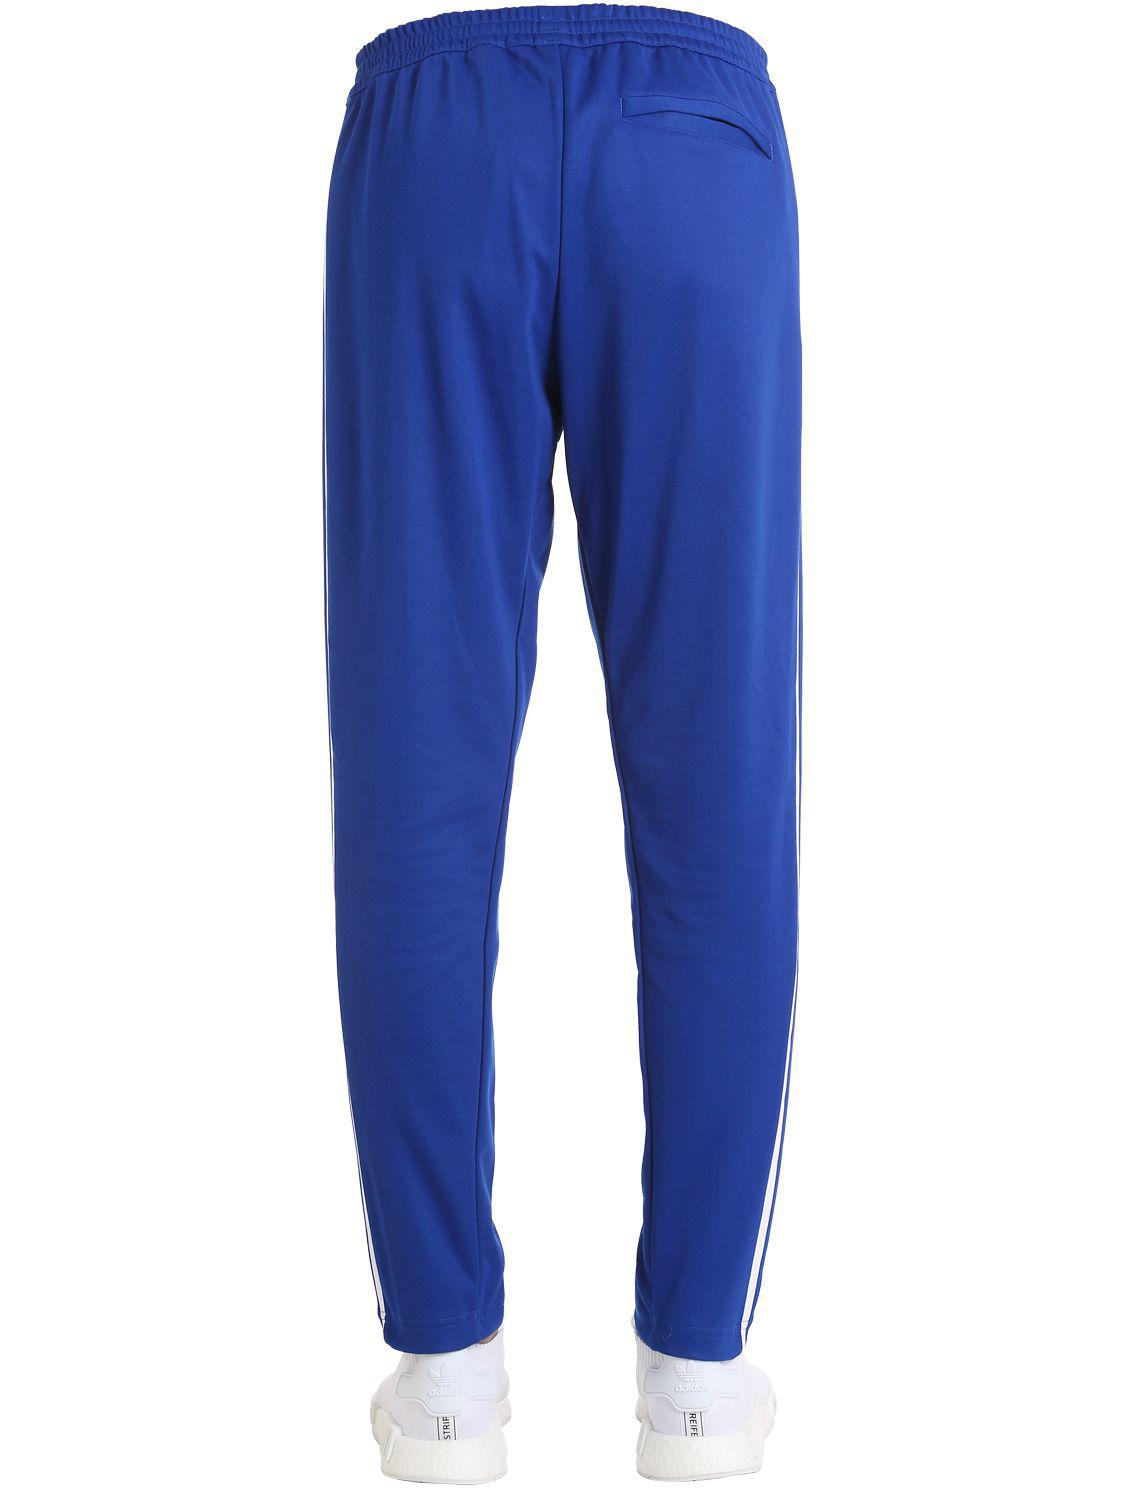 adidas Originals Franz Beckenbauer Piqué Track Pants in Blue for Men - Lyst